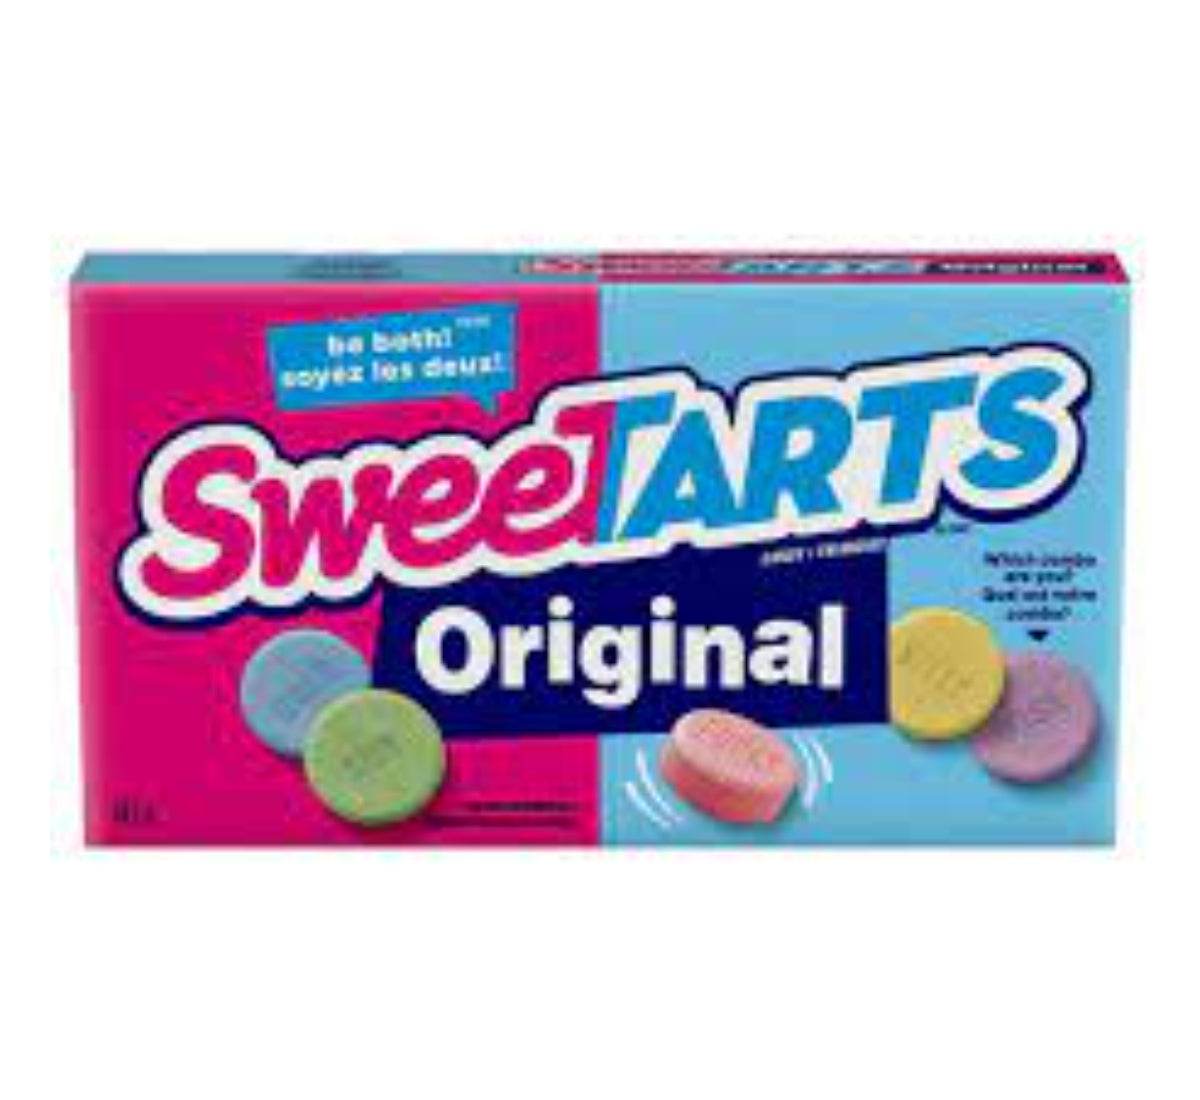 Sweetarts Original Candy 141g Theater Box (Case of 12)